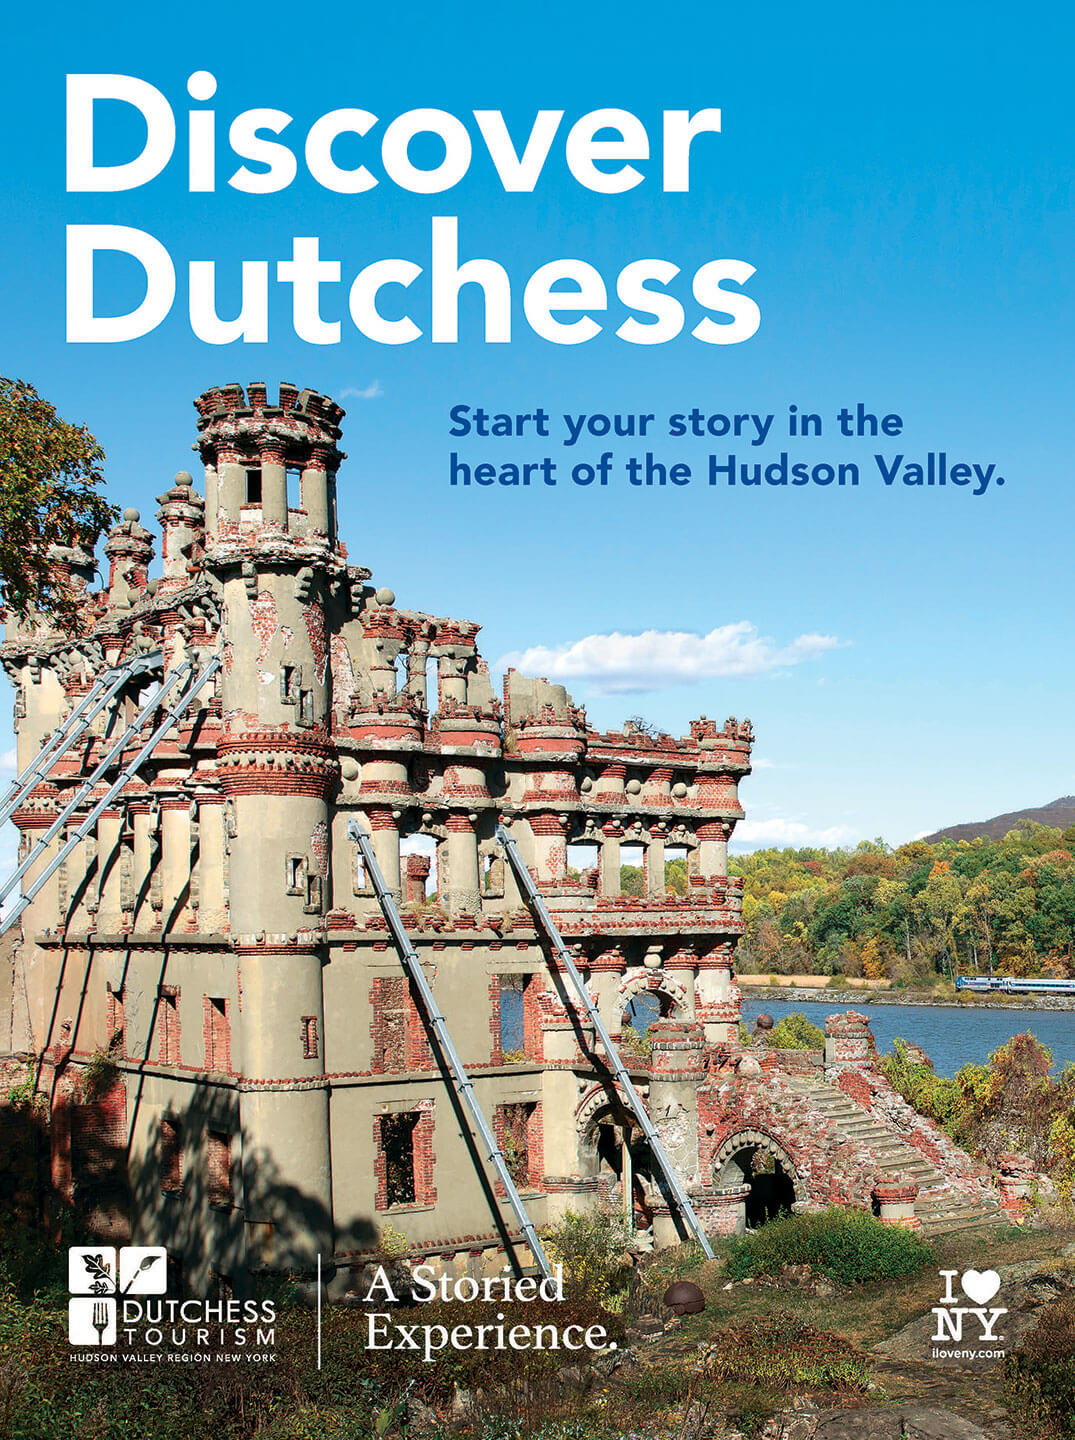 dutchess tourism calendar